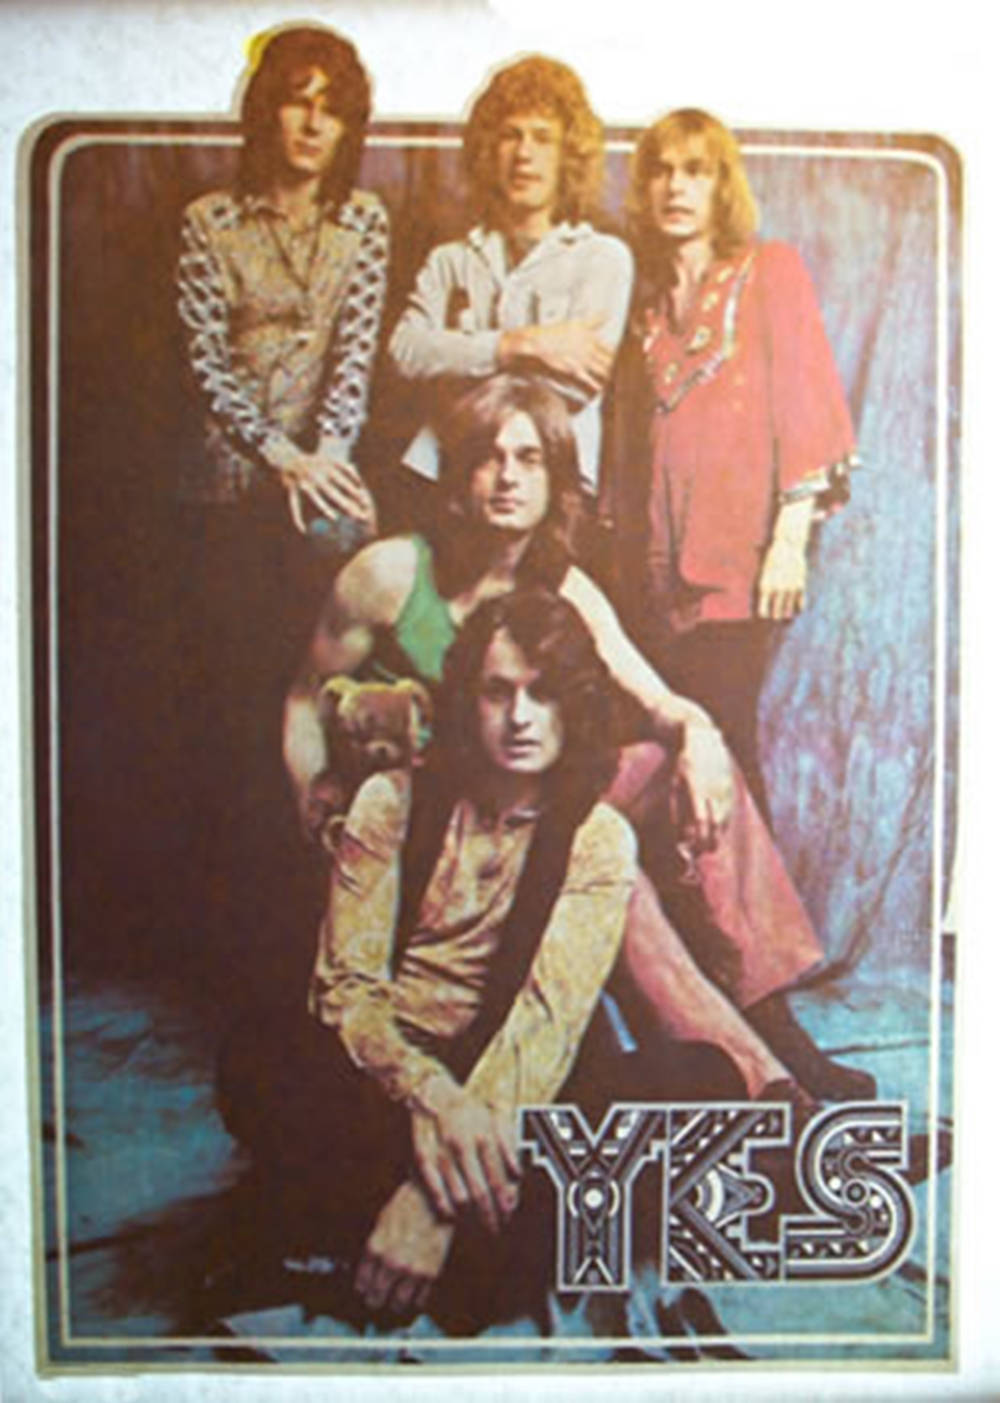 Yes English Progressive Rock Band Wallpaper